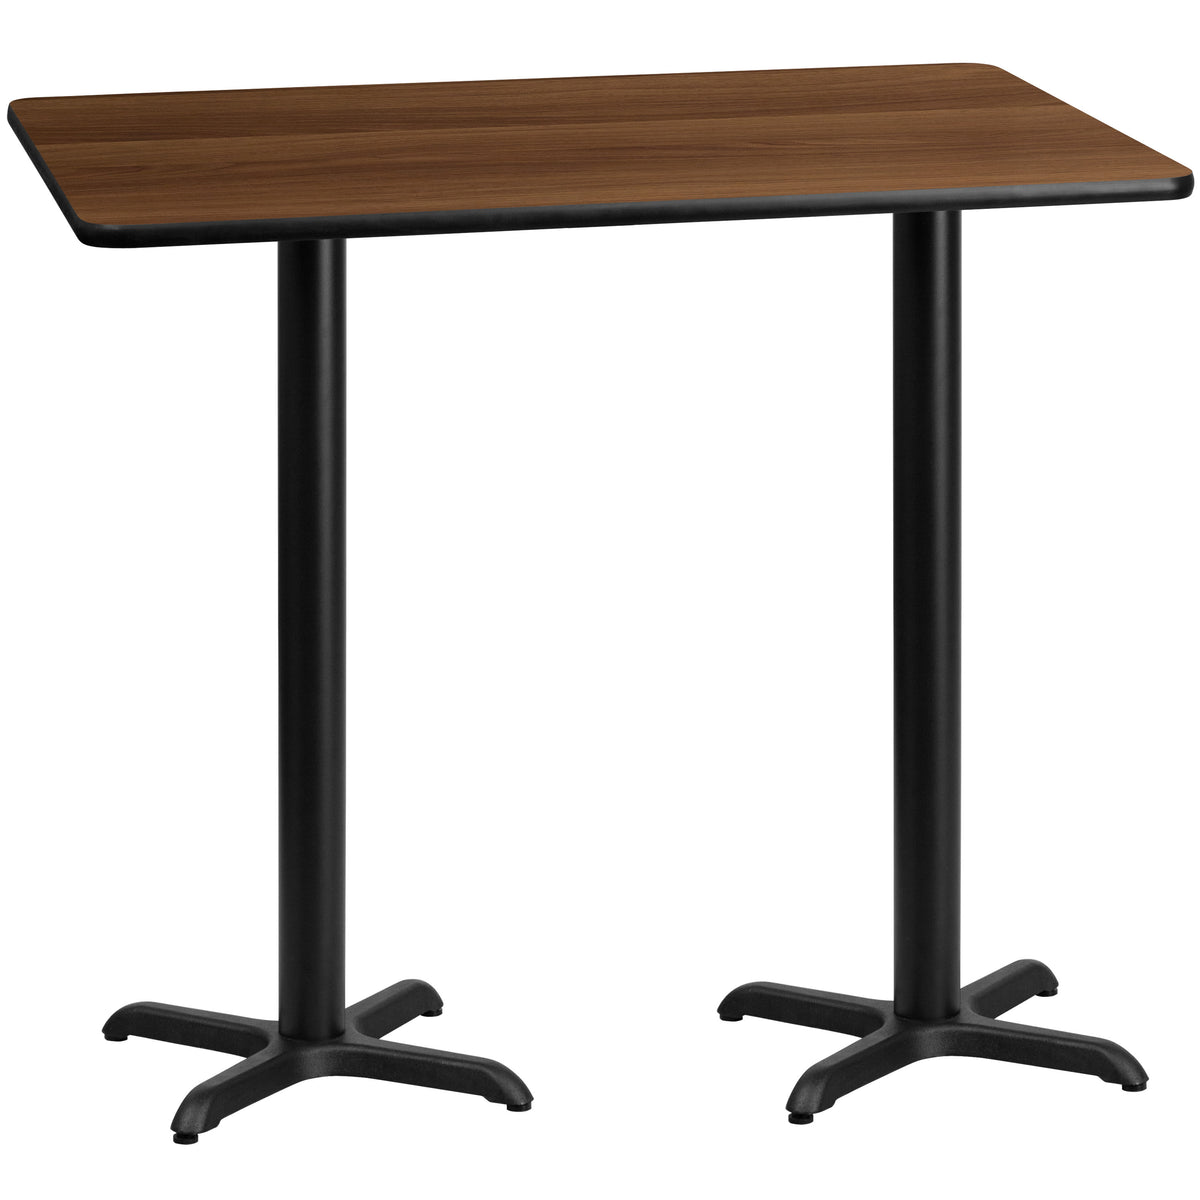 Walnut |#| 30x60 Rectangular Walnut Laminate Table Top & 22inch x 22inch Bar Height Table Bases